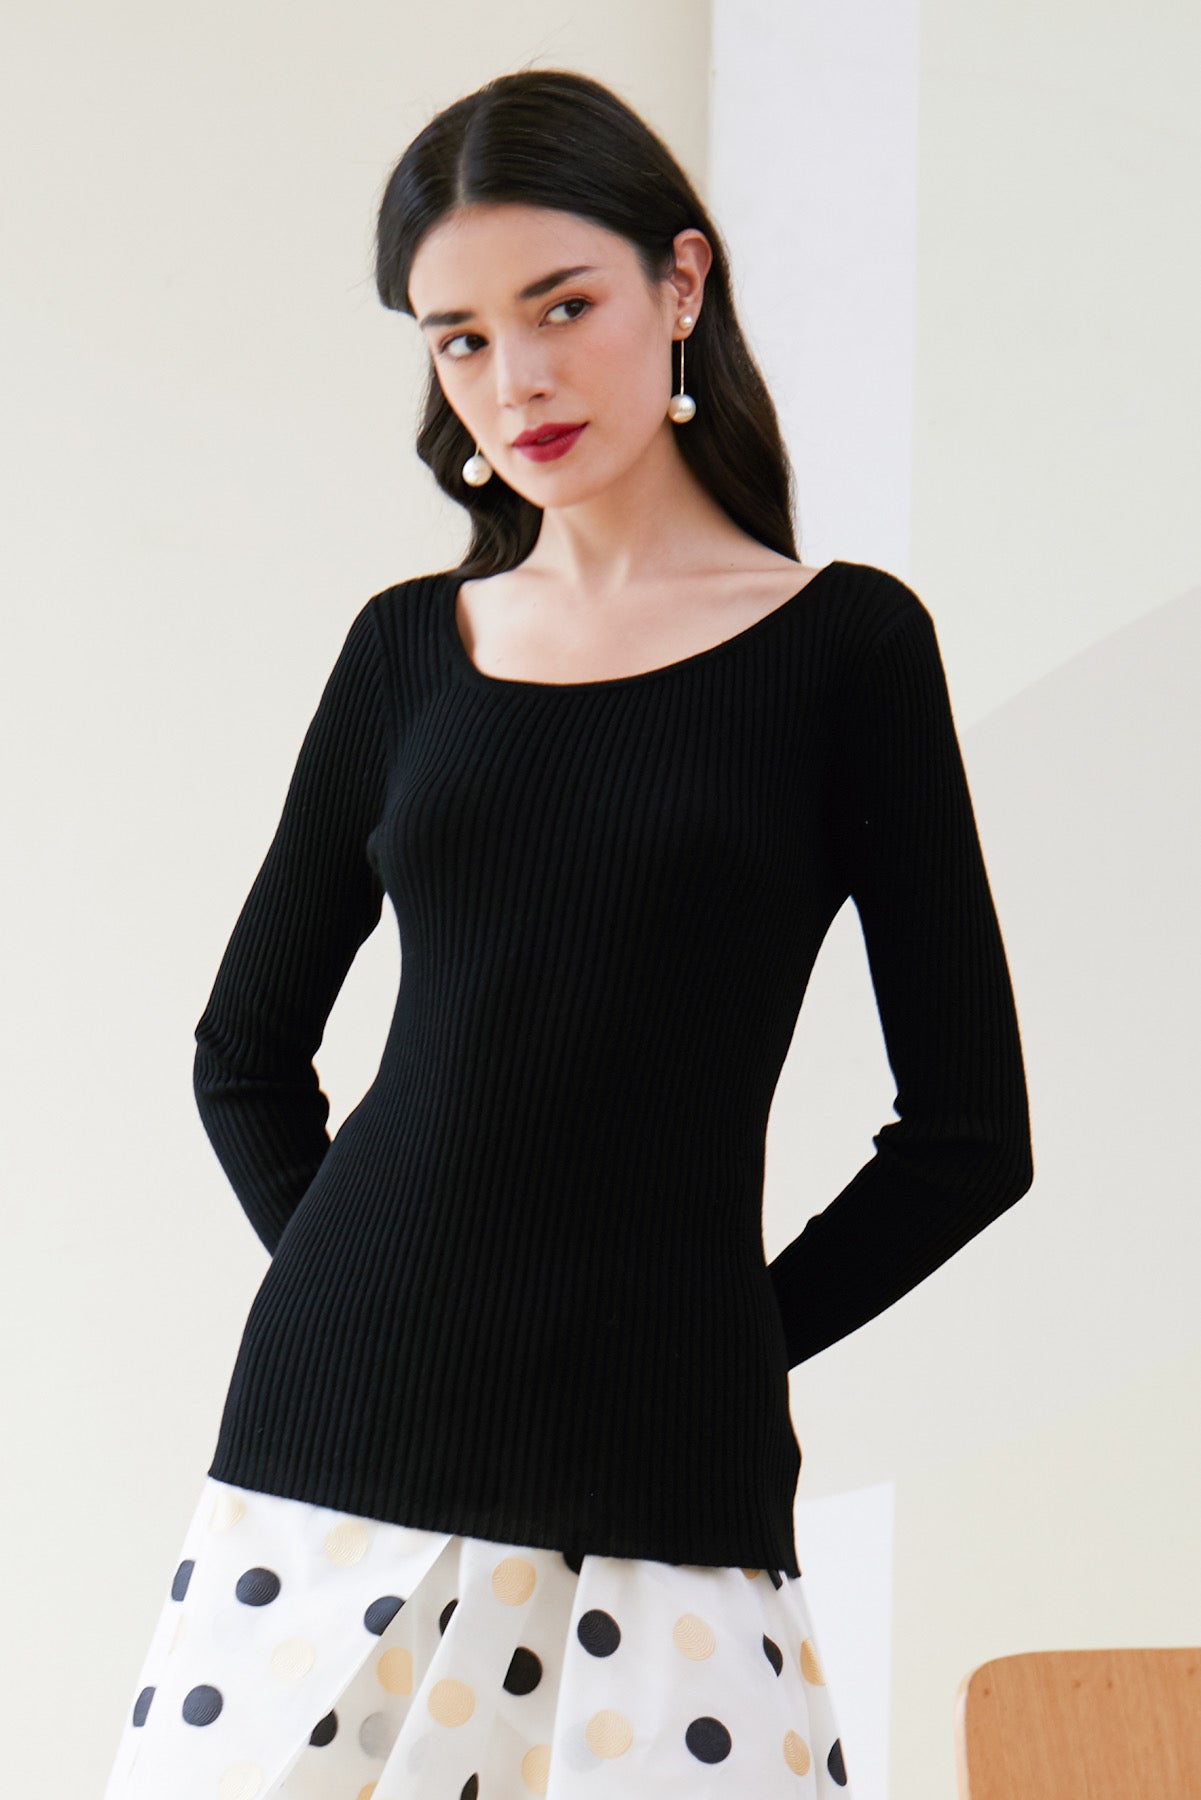 SKYE San Francisco Shop SF Chic Modern Elegant Classy Women Clothing French Parisian Minimalist Fashion Elian Ribbed Sweater 3